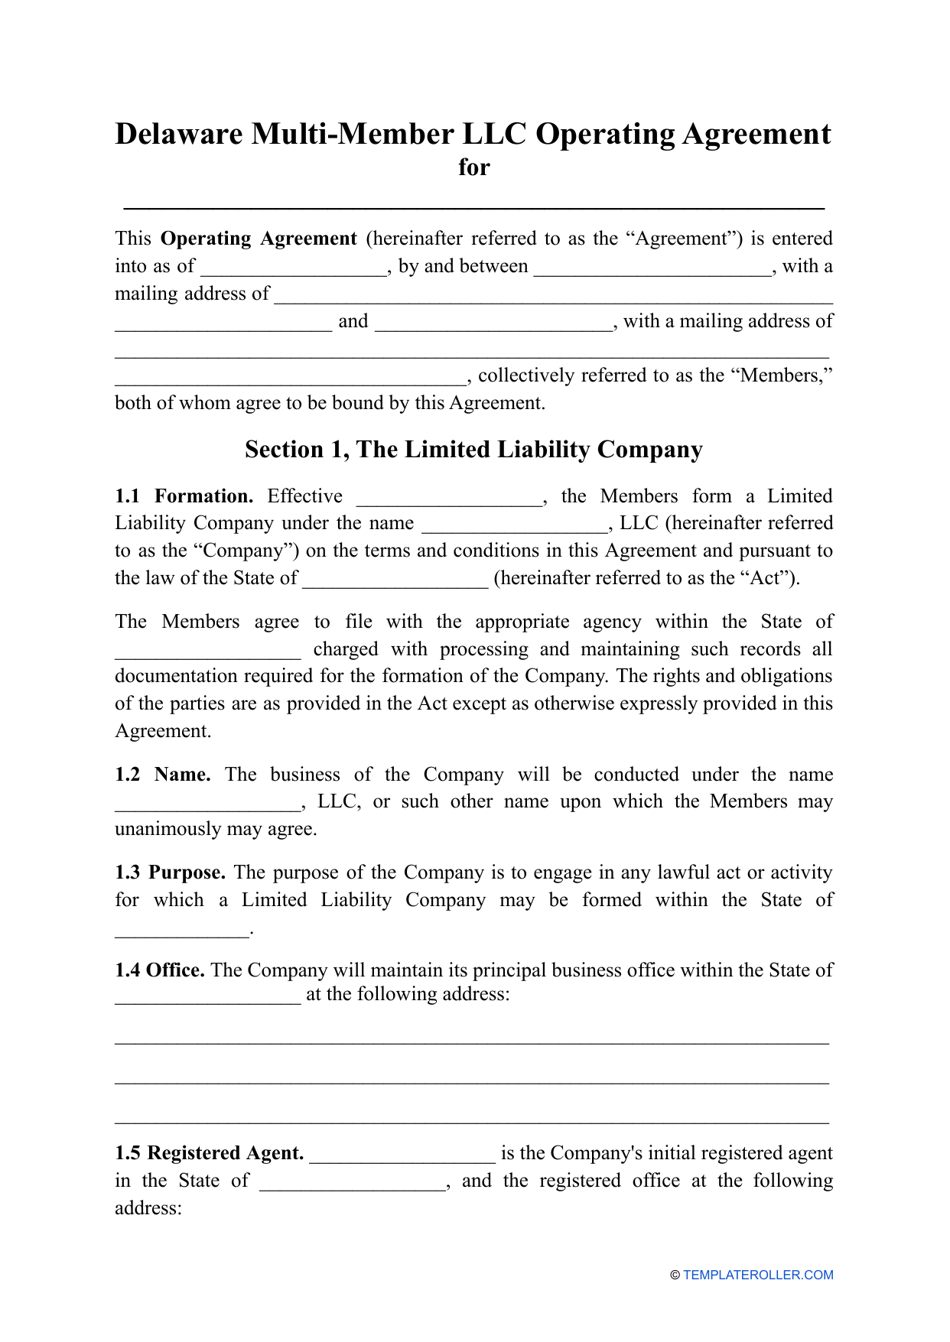 Multi-Member LLC Operating Agreement Template - Delaware, Page 1